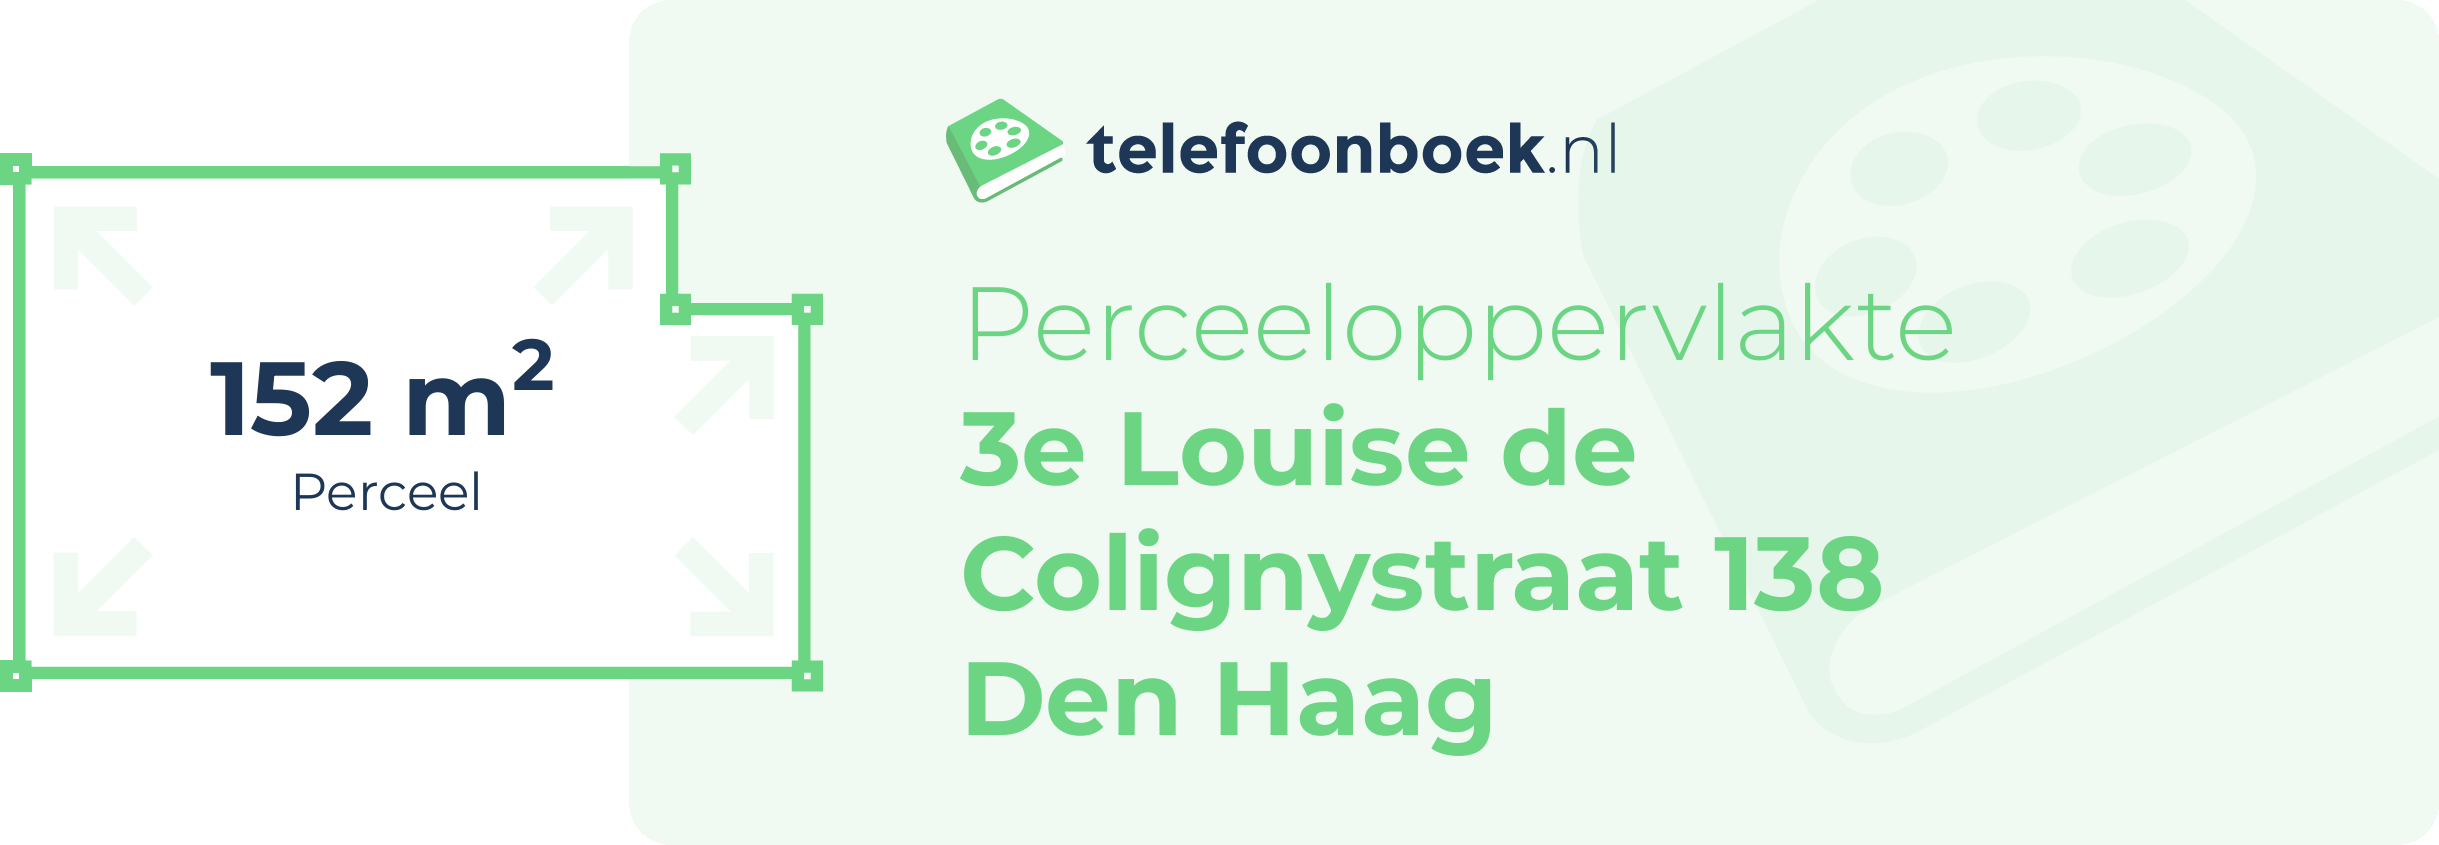 Perceeloppervlakte 3e Louise De Colignystraat 138 Den Haag